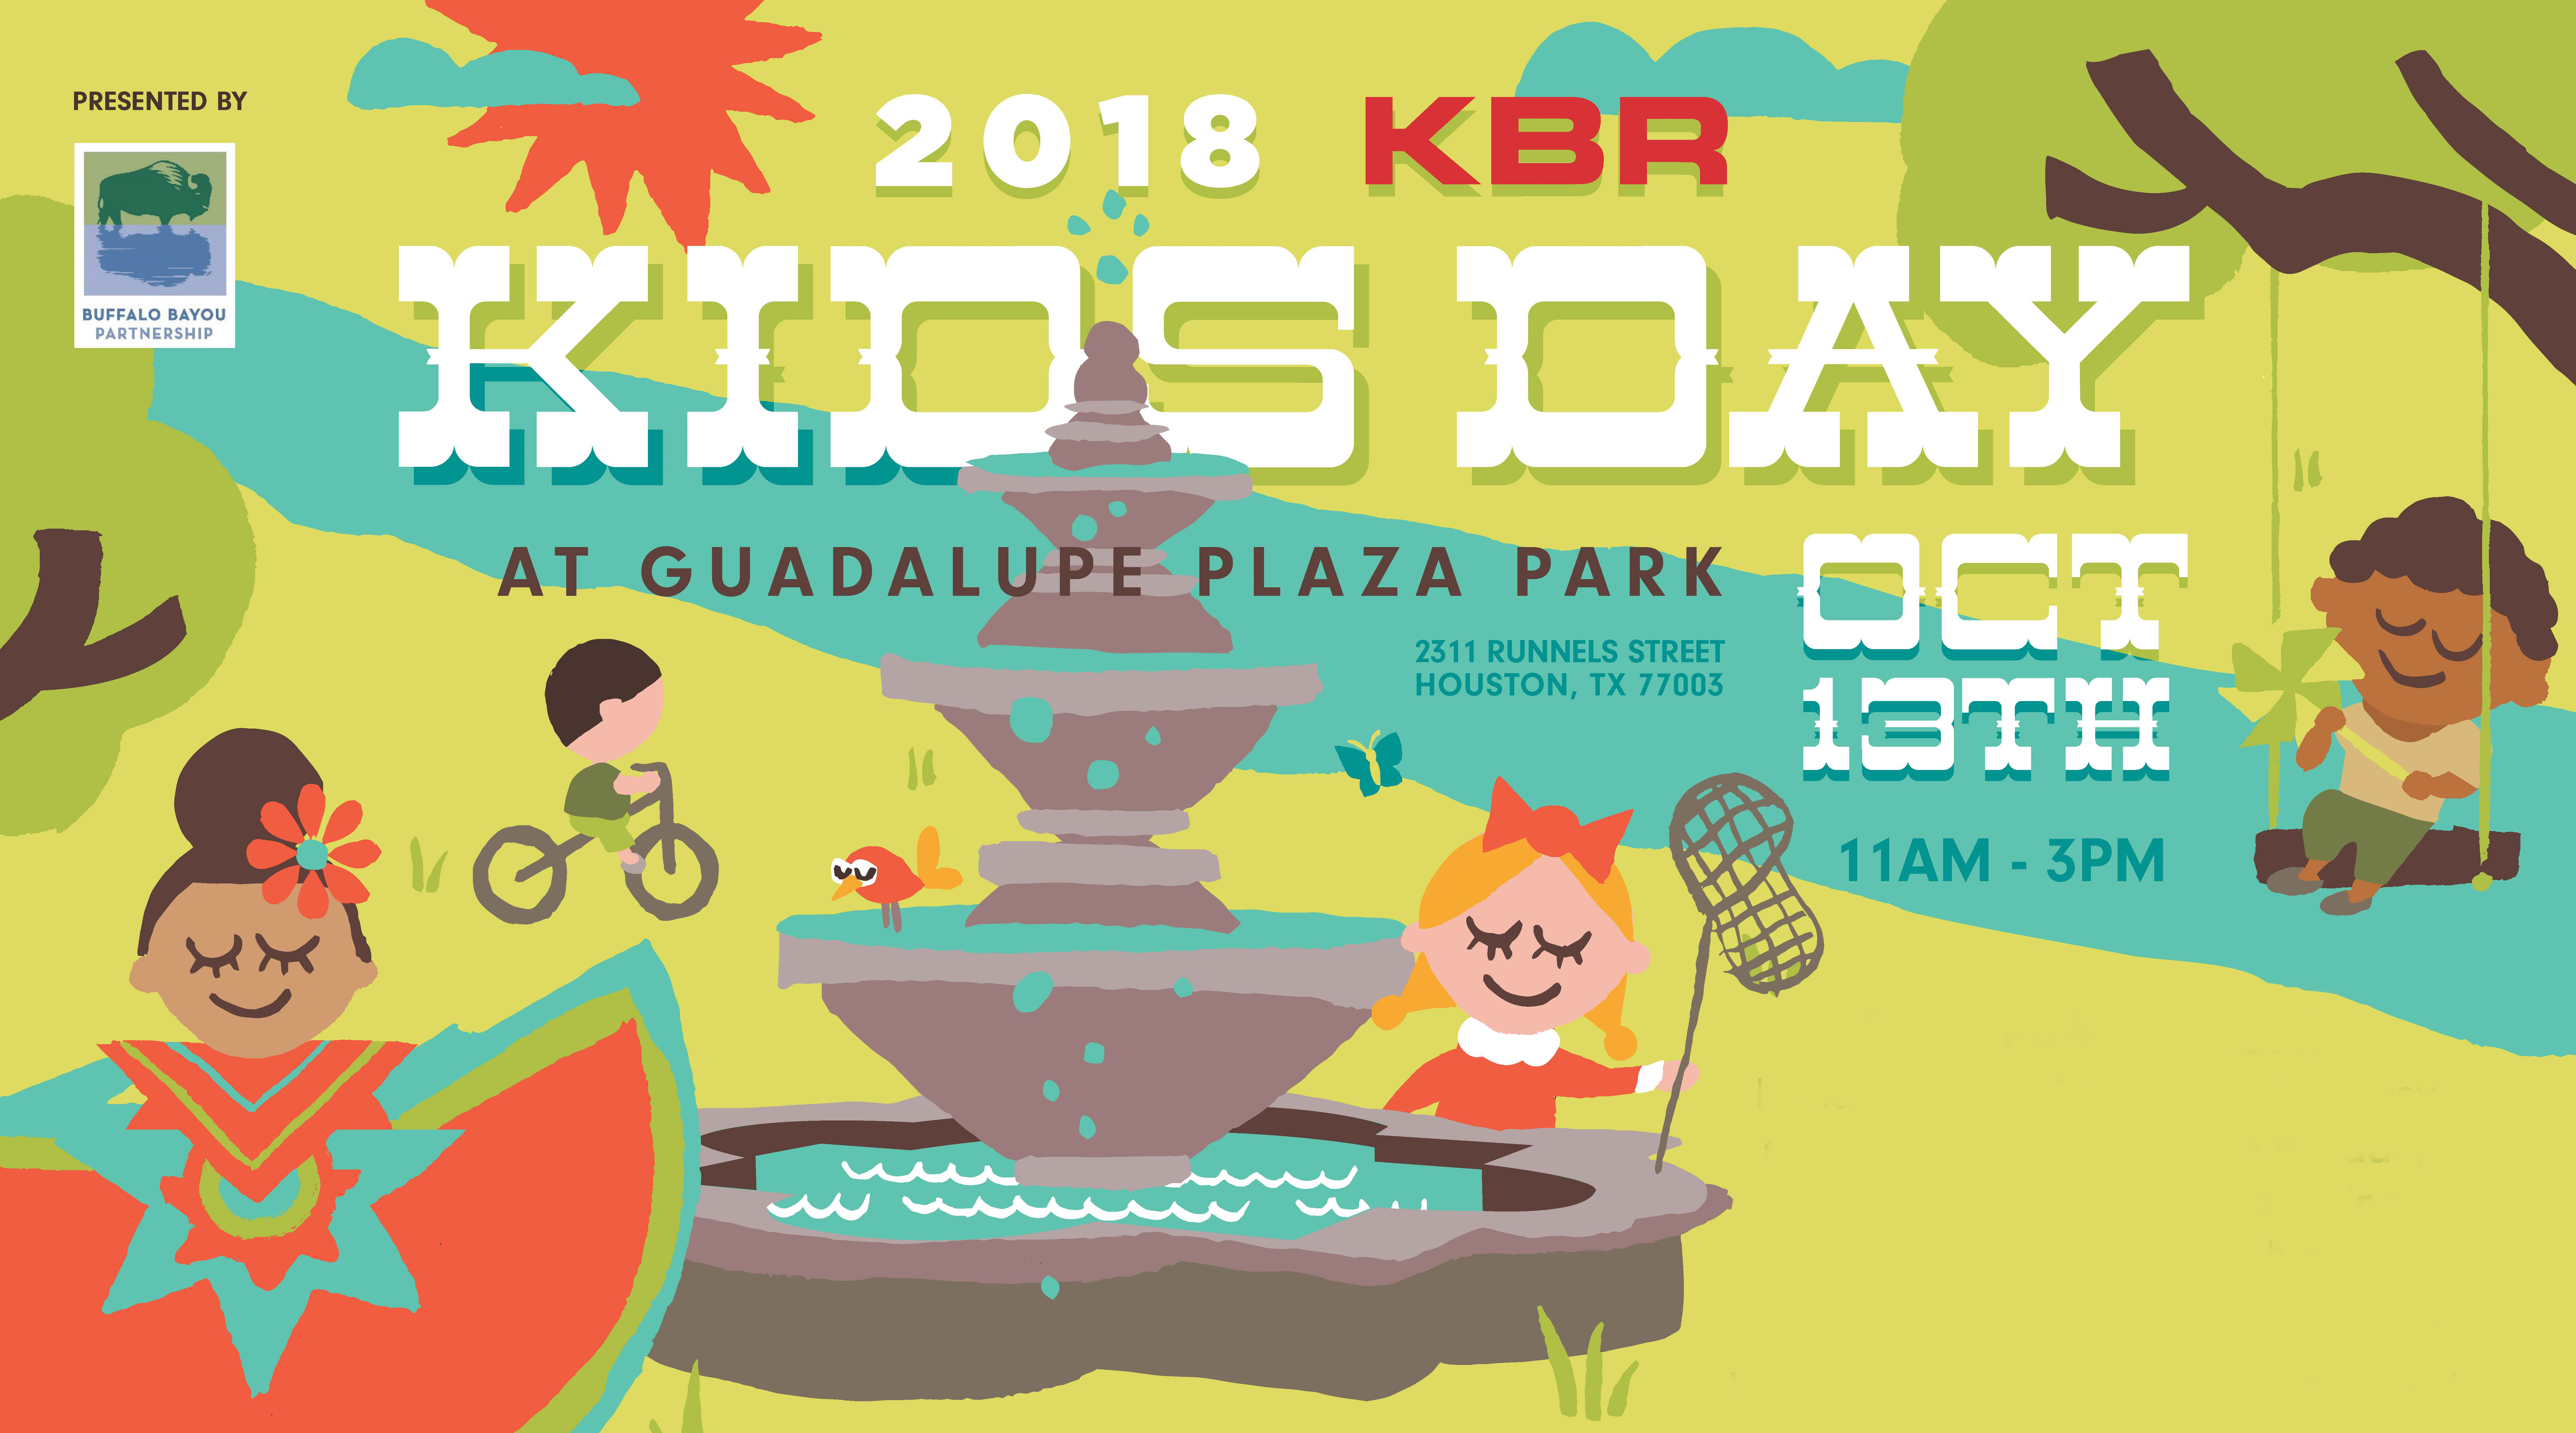 Image 2018 KBR Kids Day